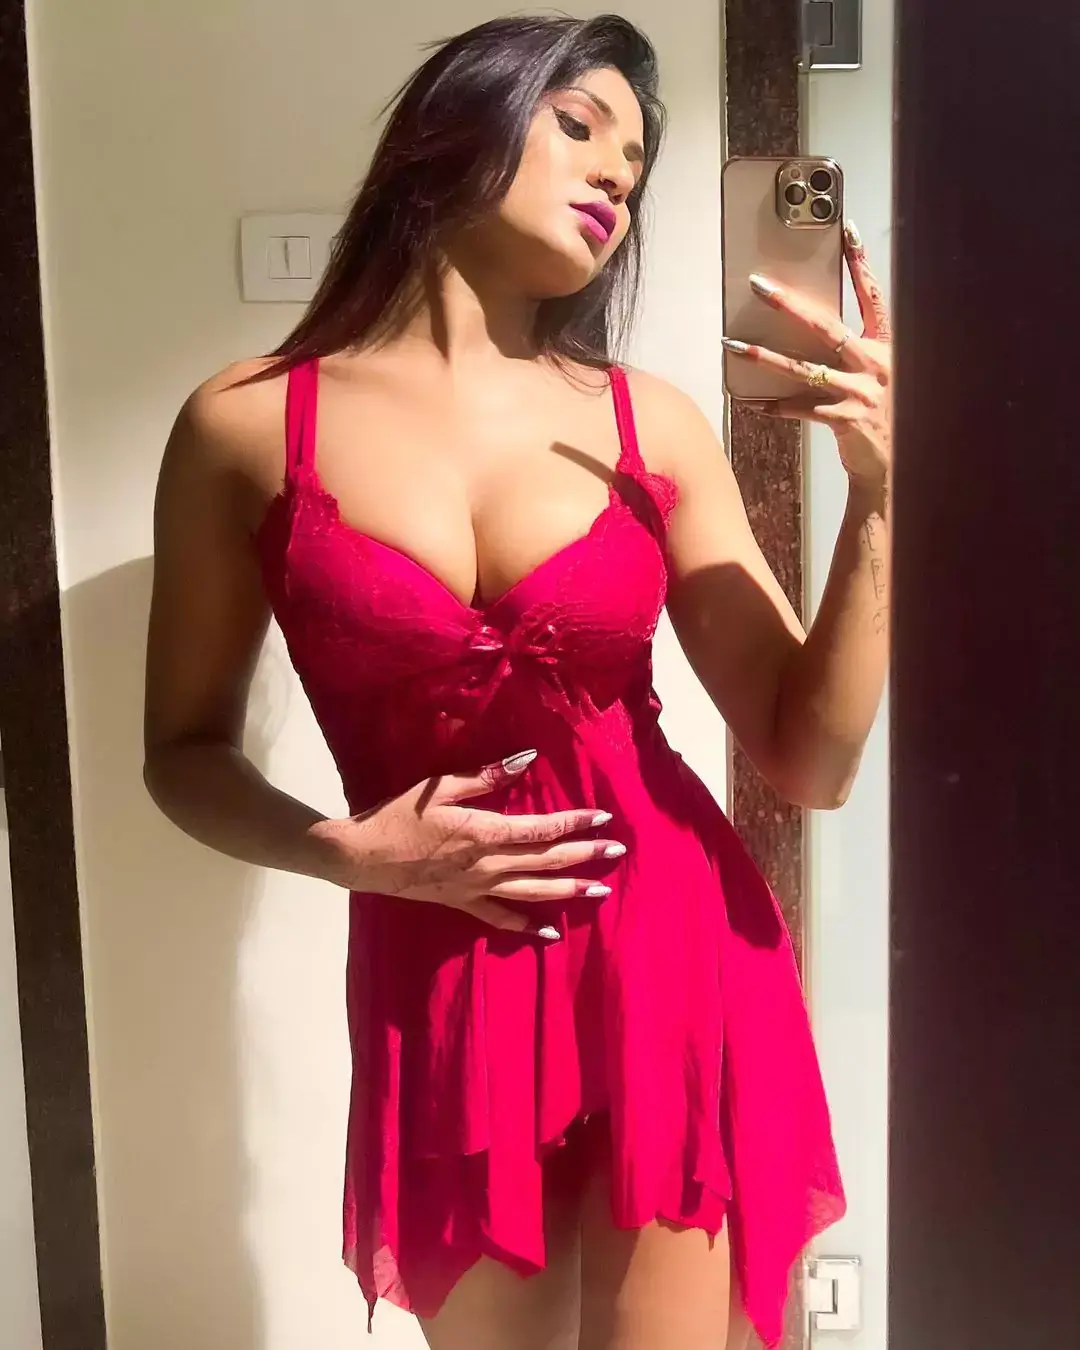 Shanu gupta female hyderabad escorts hot sexy call girls escorts agencies exciting